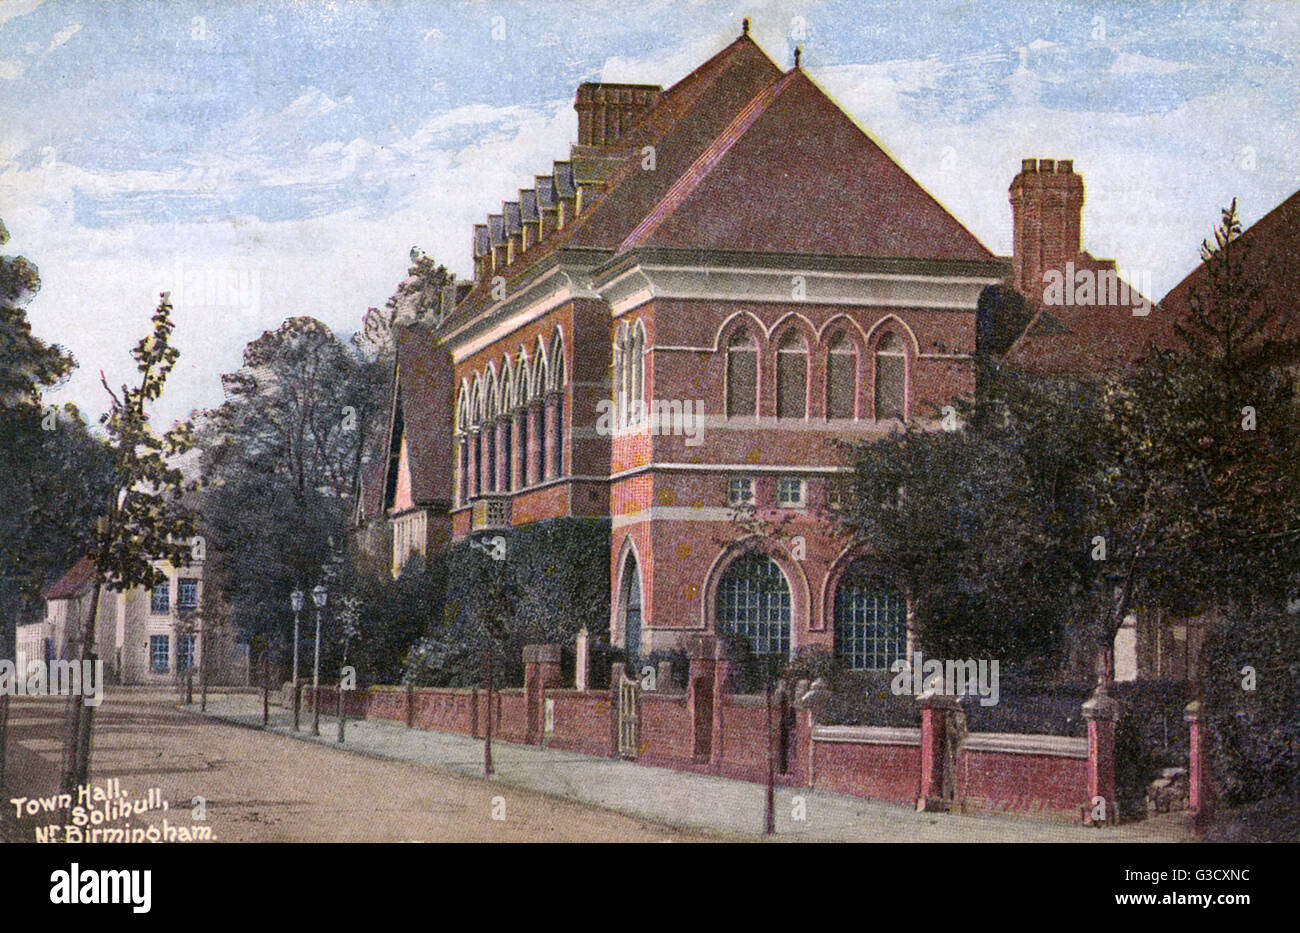 Town Hall, Solihull, near Birmingham, England Stock Photo